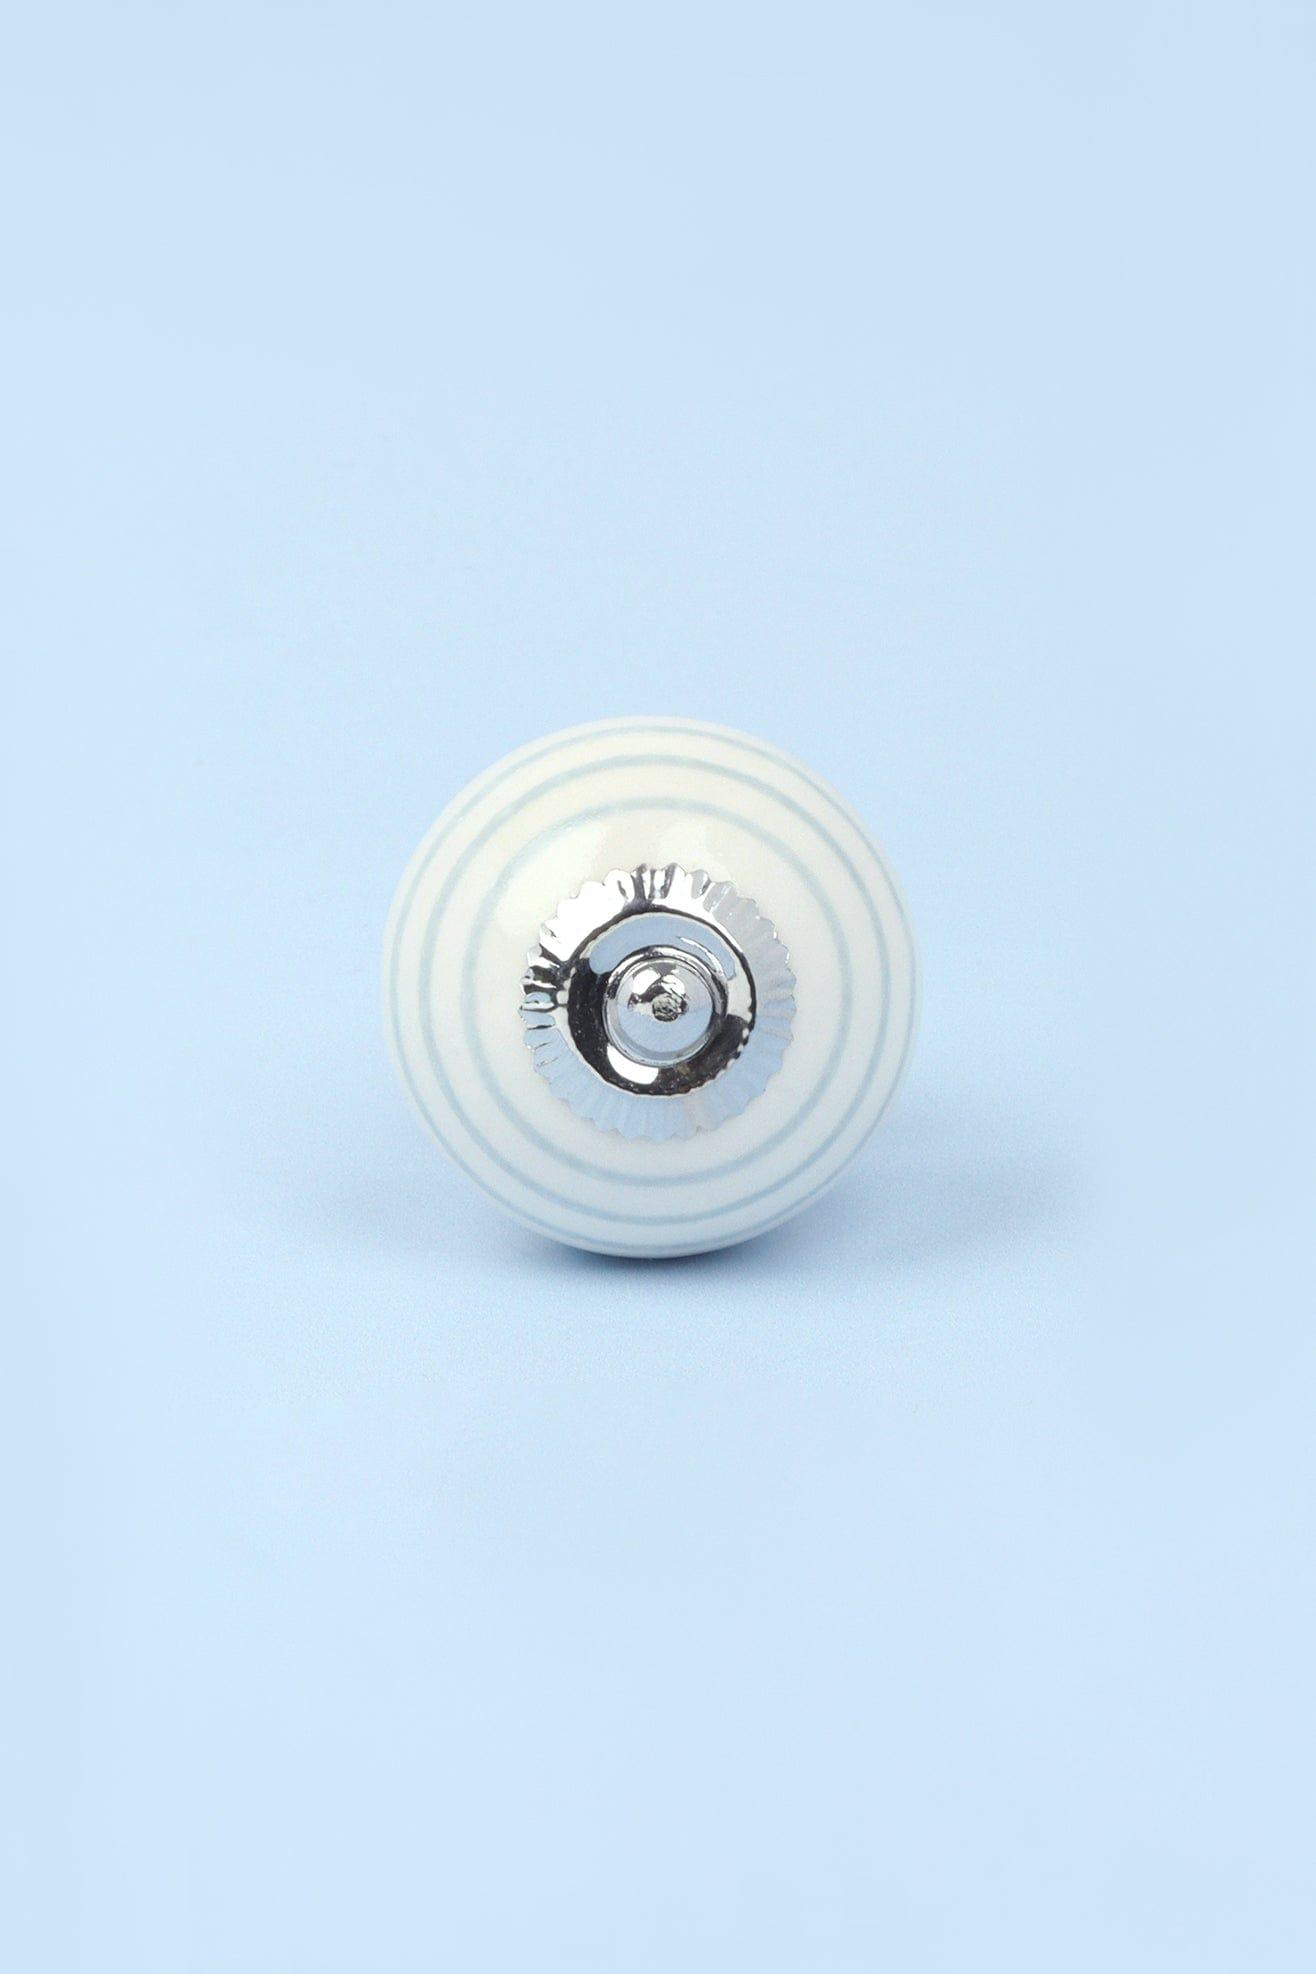 Gdecorstore Door Knobs & Handles Striped on White Base Ceramic Door Knobs Cupboard Pull Handles